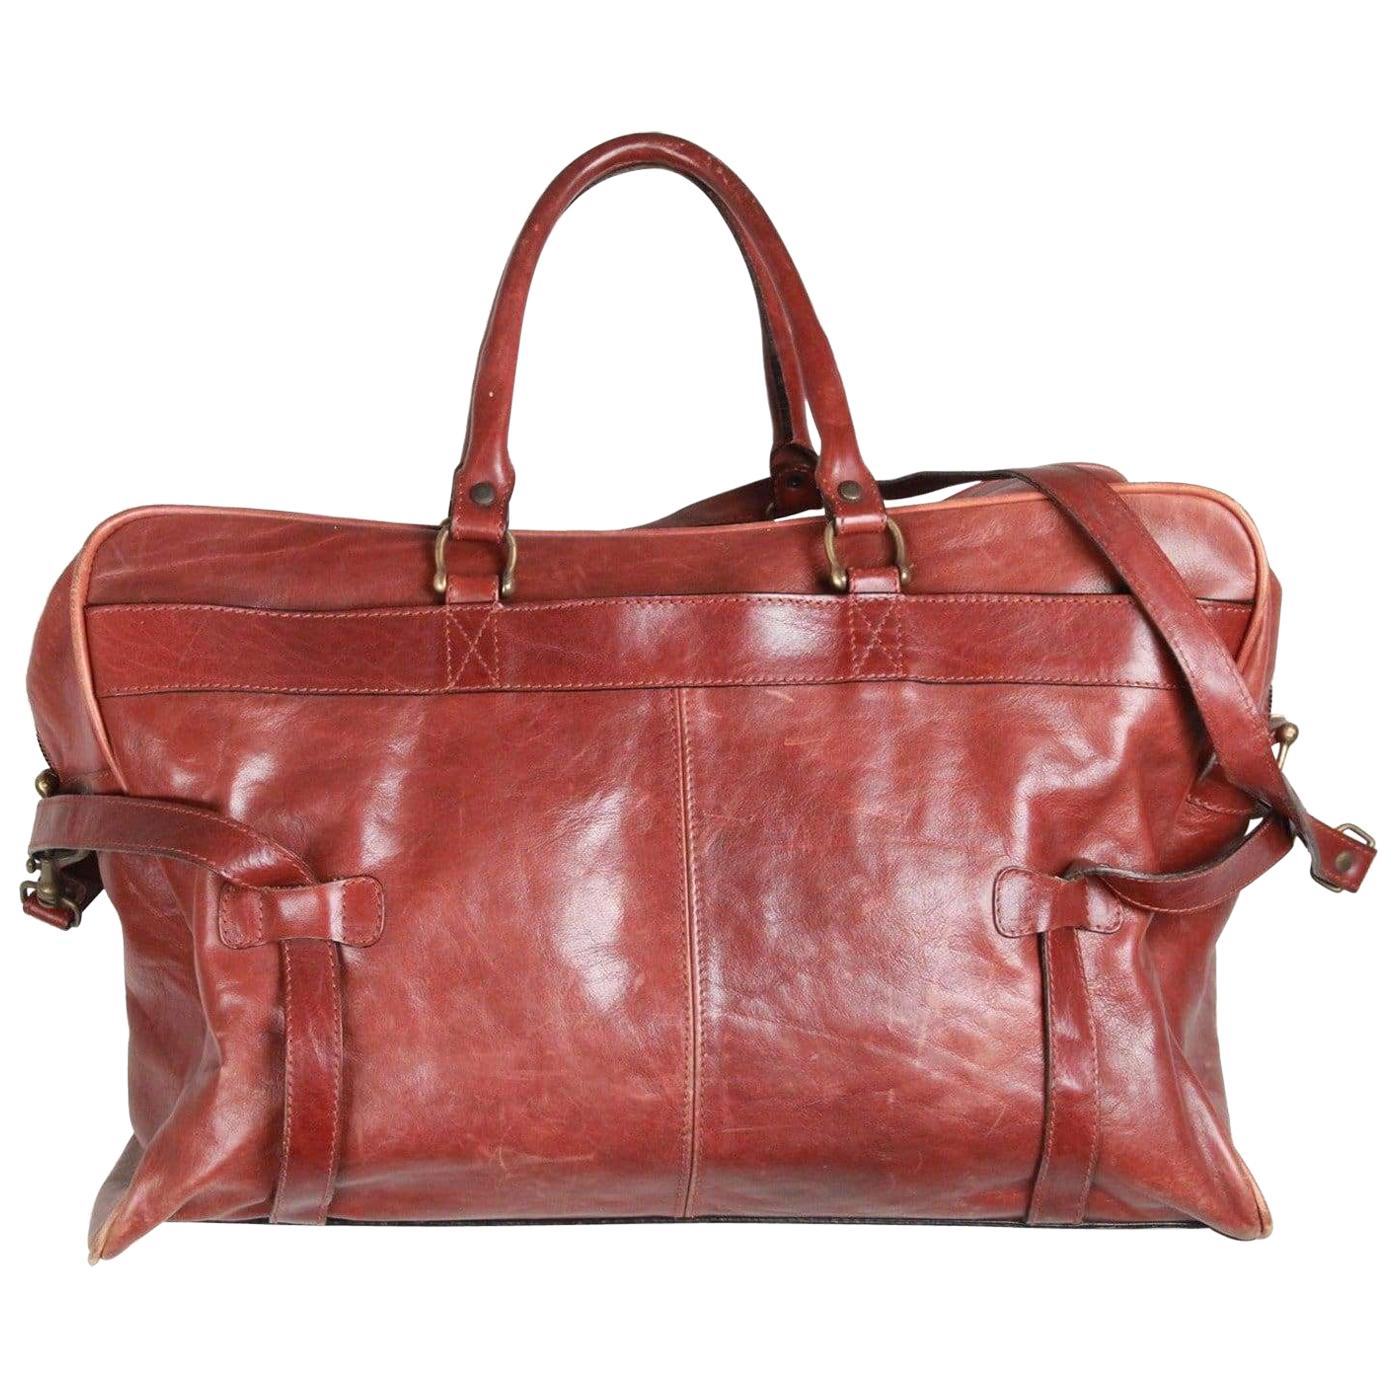 ALDO RAFFA Brown Leather DUFFLE TRAVEL BAG Carry On